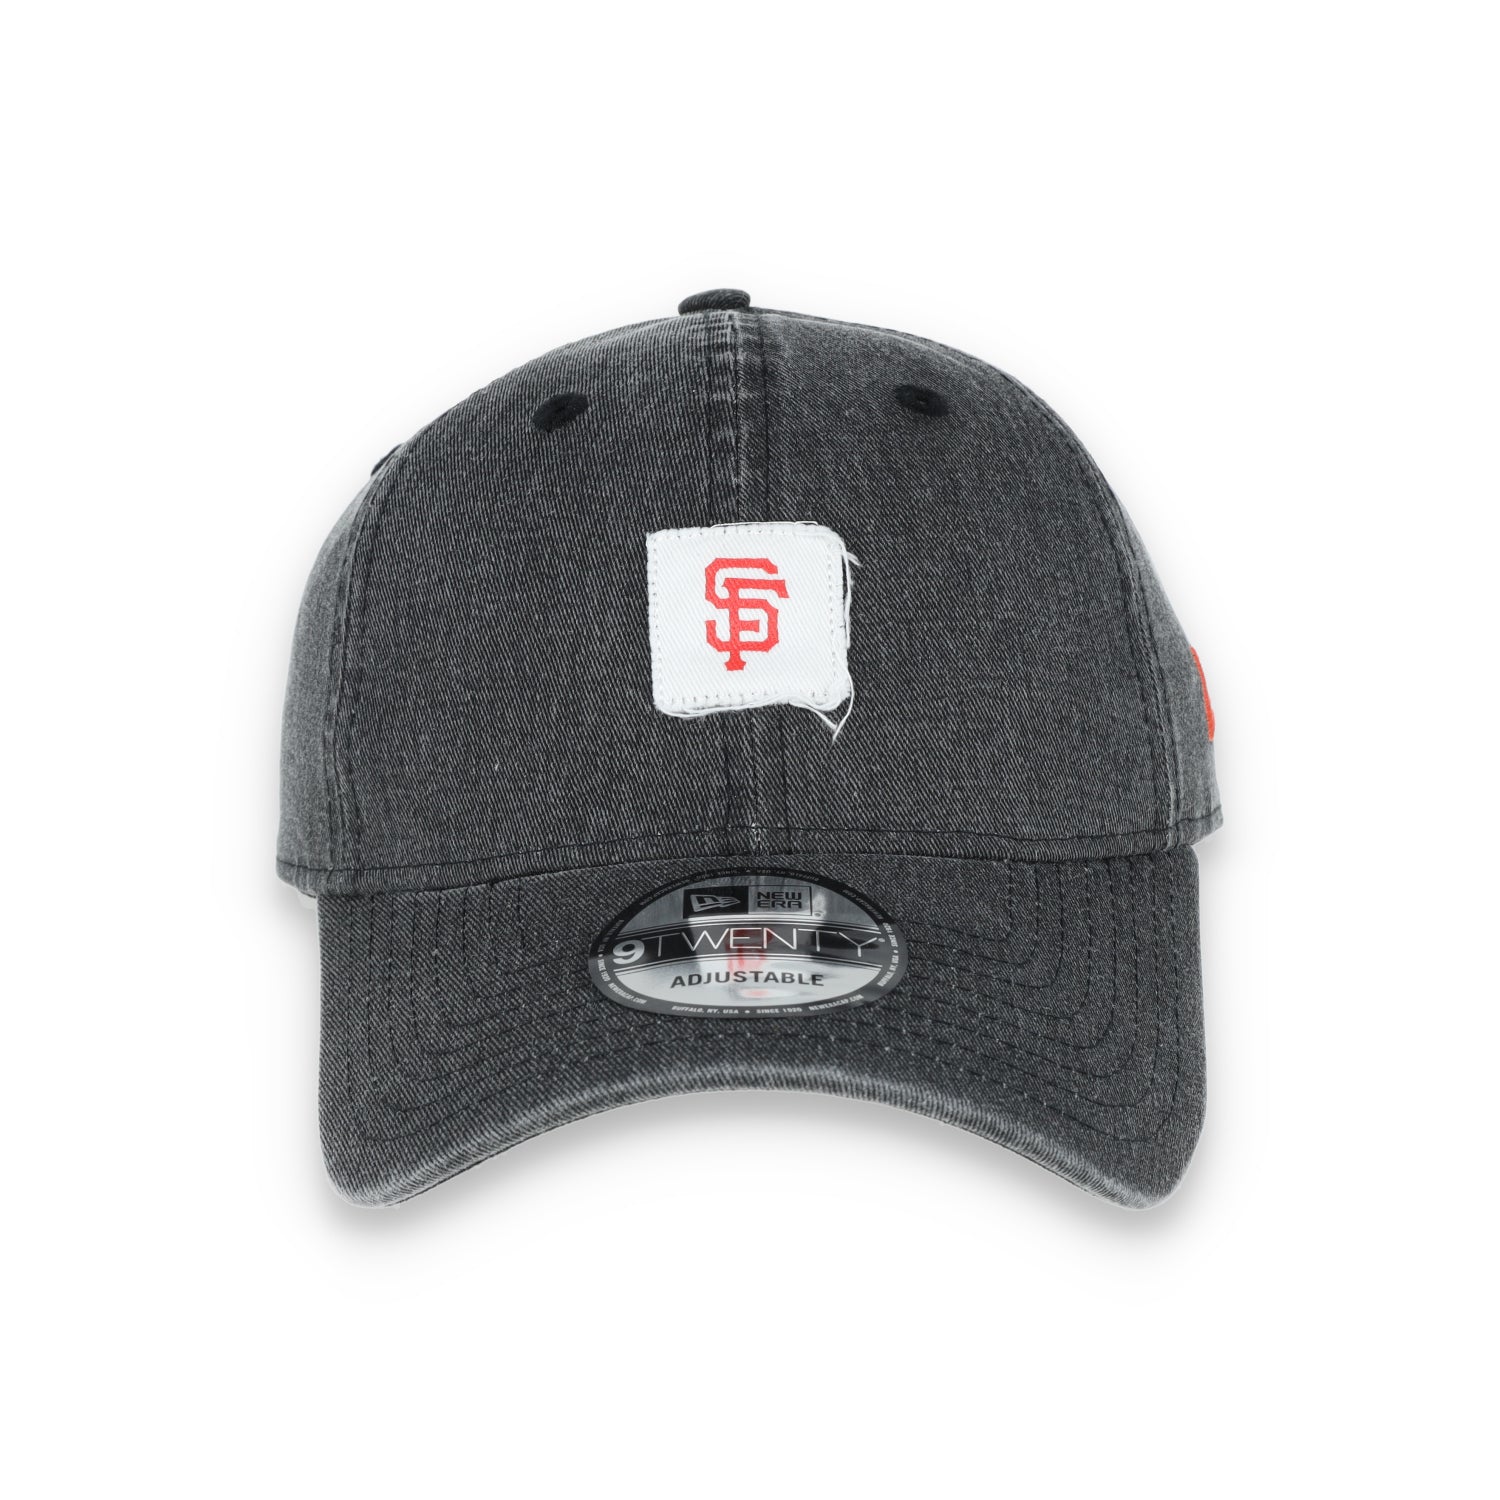 New Era San Francisco Giants 9TWENTY Adjustable Hat-Heather Grey